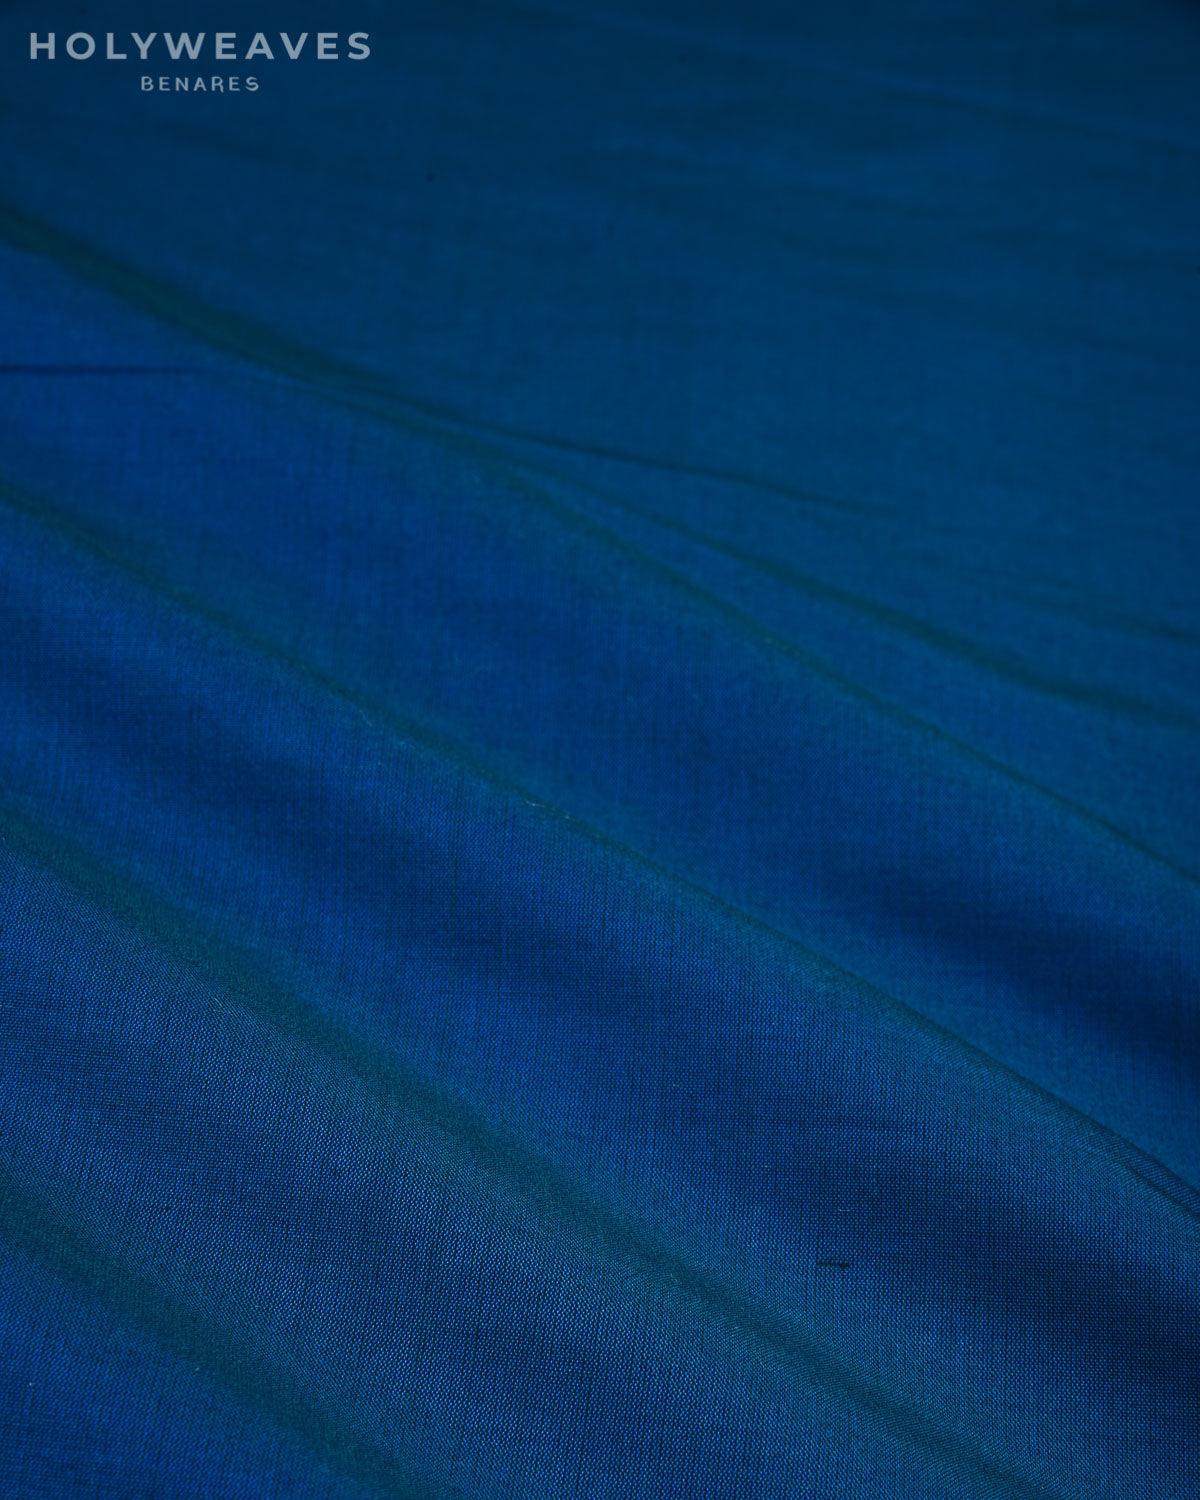 Prussian Blue Banarasi Plain Woven Spun Silk Fabric - By HolyWeaves, Benares